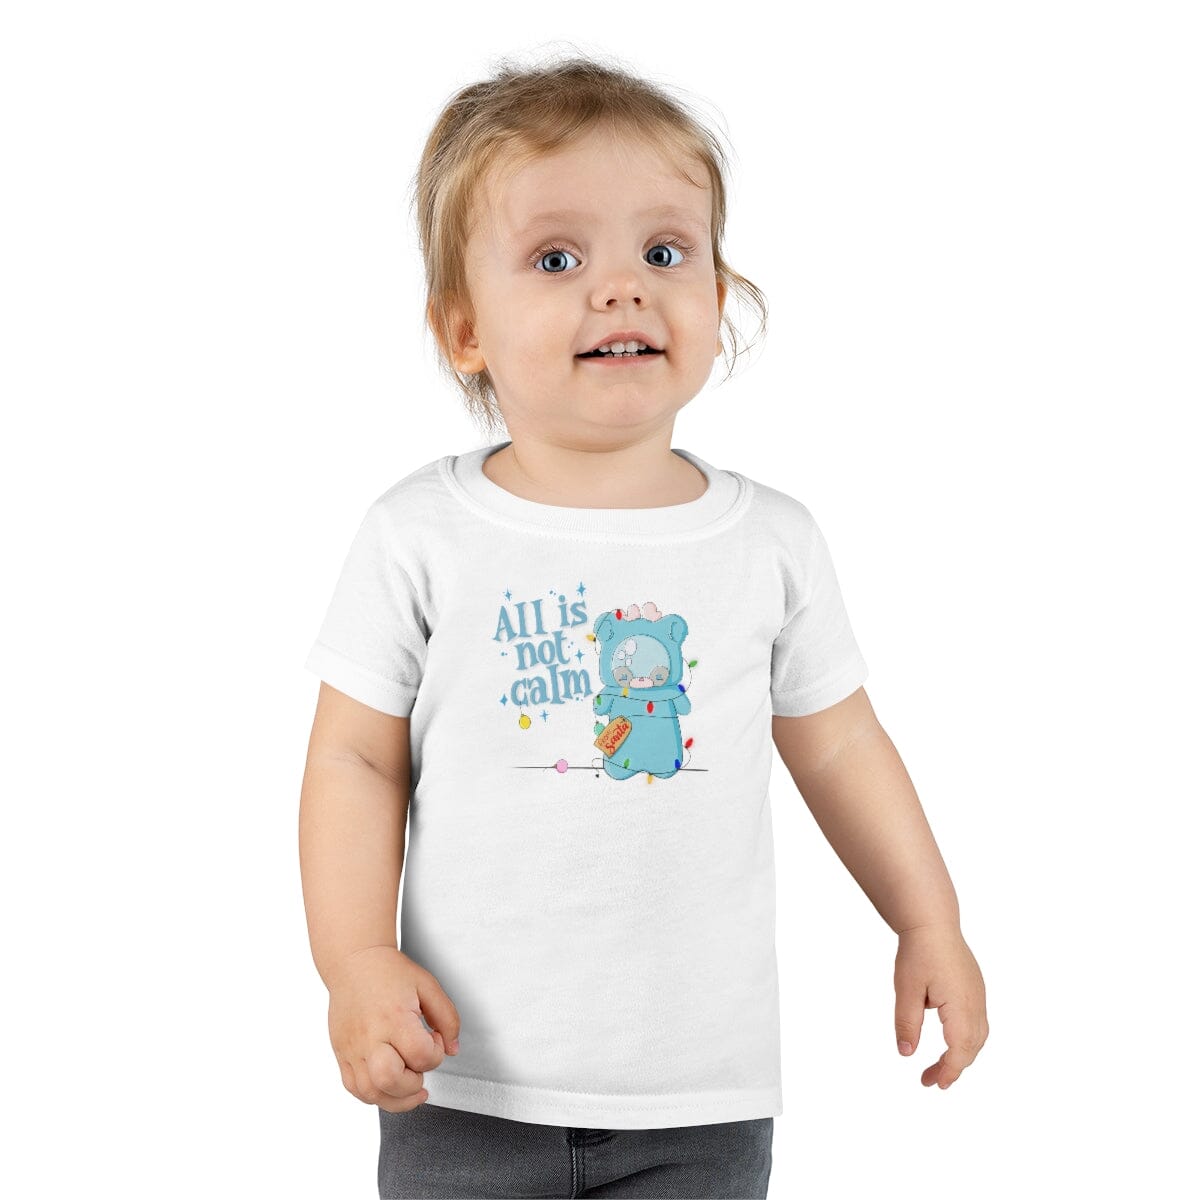 The Clark Toddler T-shirt